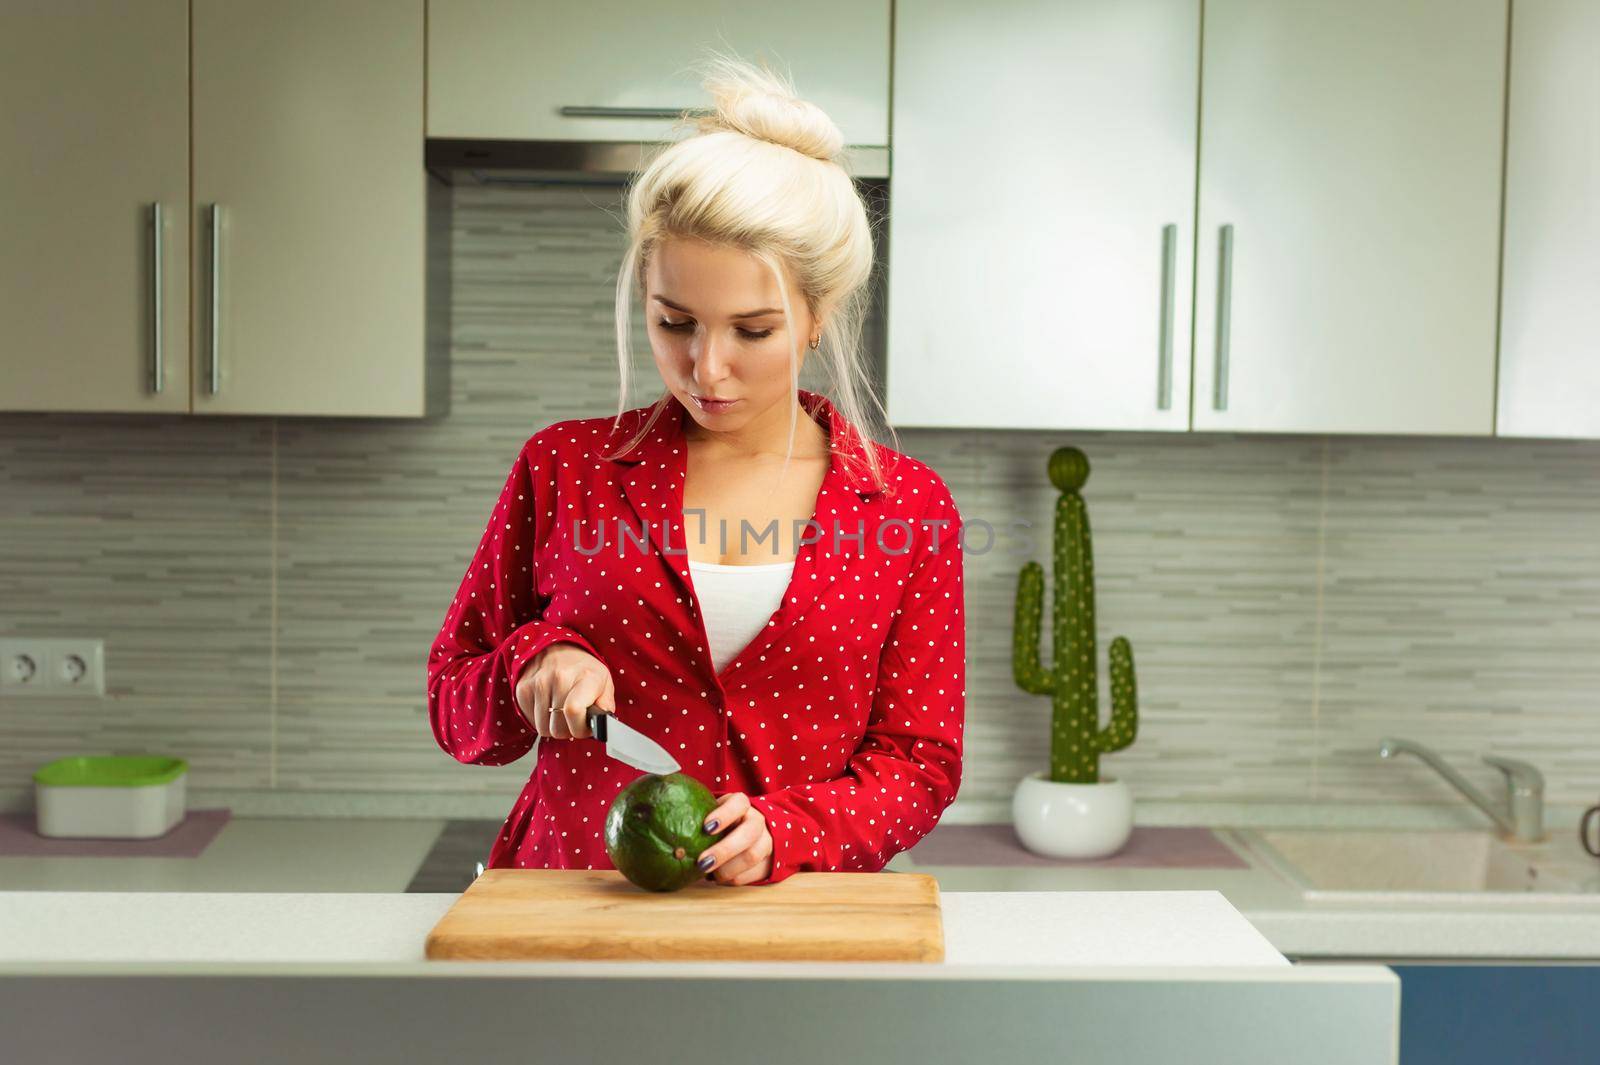 the blonde vegan woman cuts avocado in kitchen